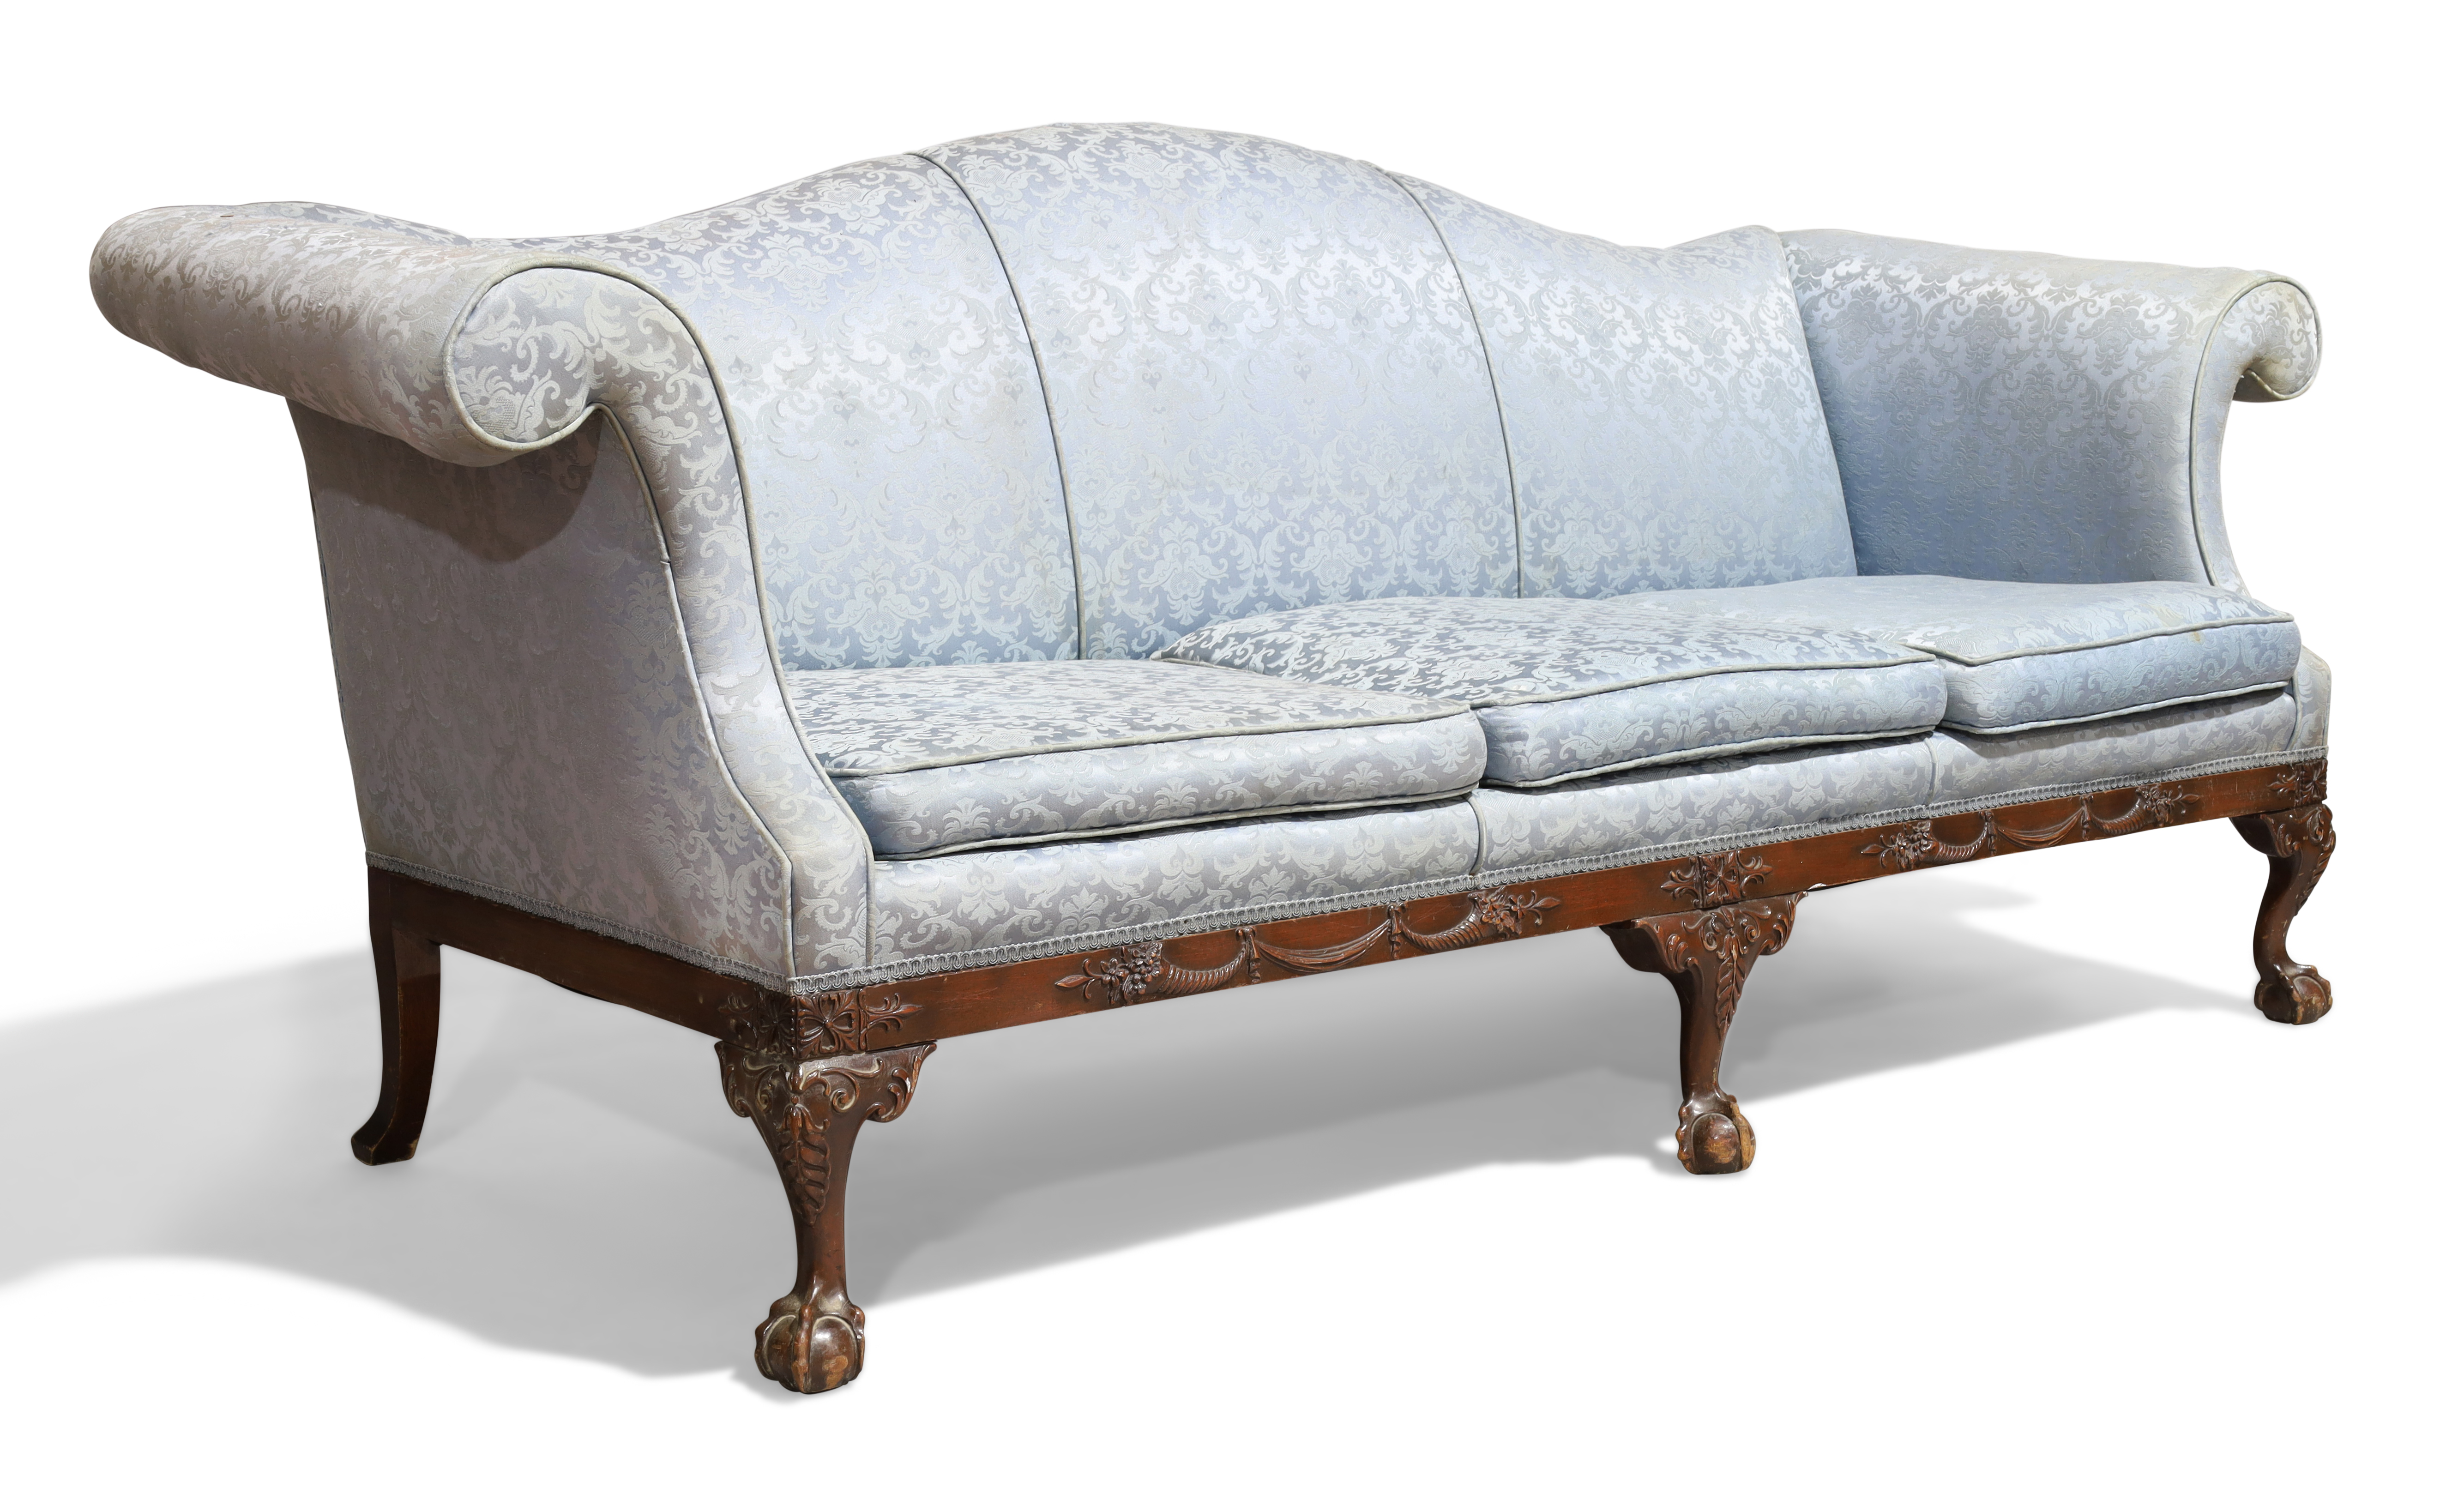 A George III style three seat camel back sofa - Image 2 of 3